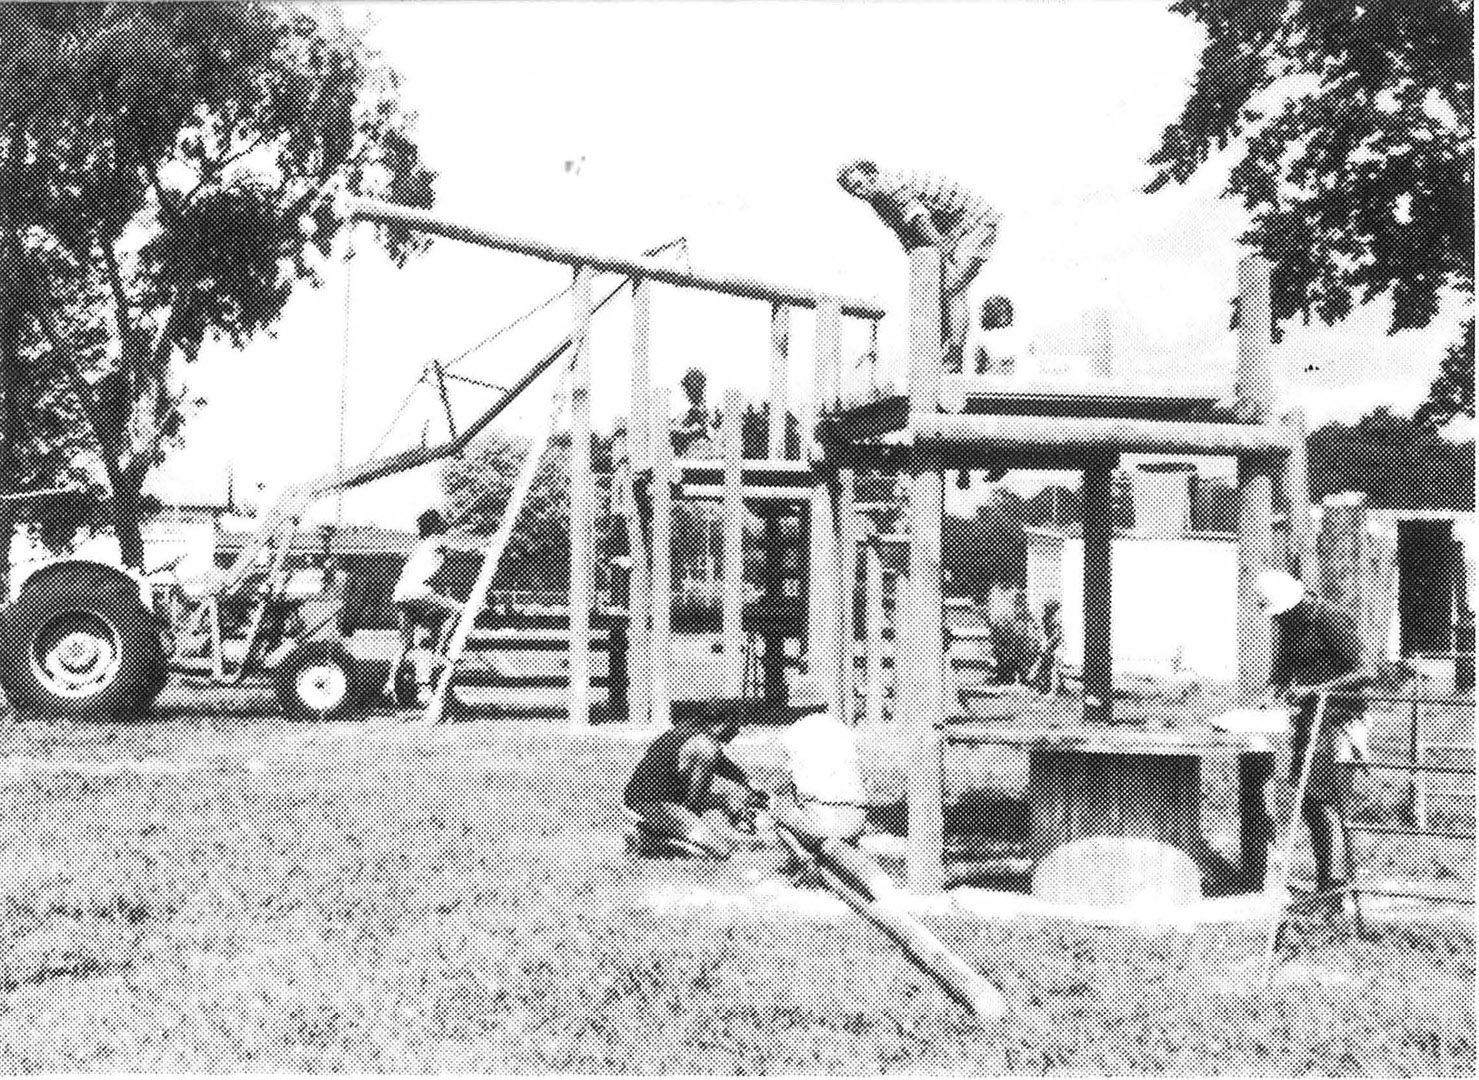 Construction of school adventure playground 1978